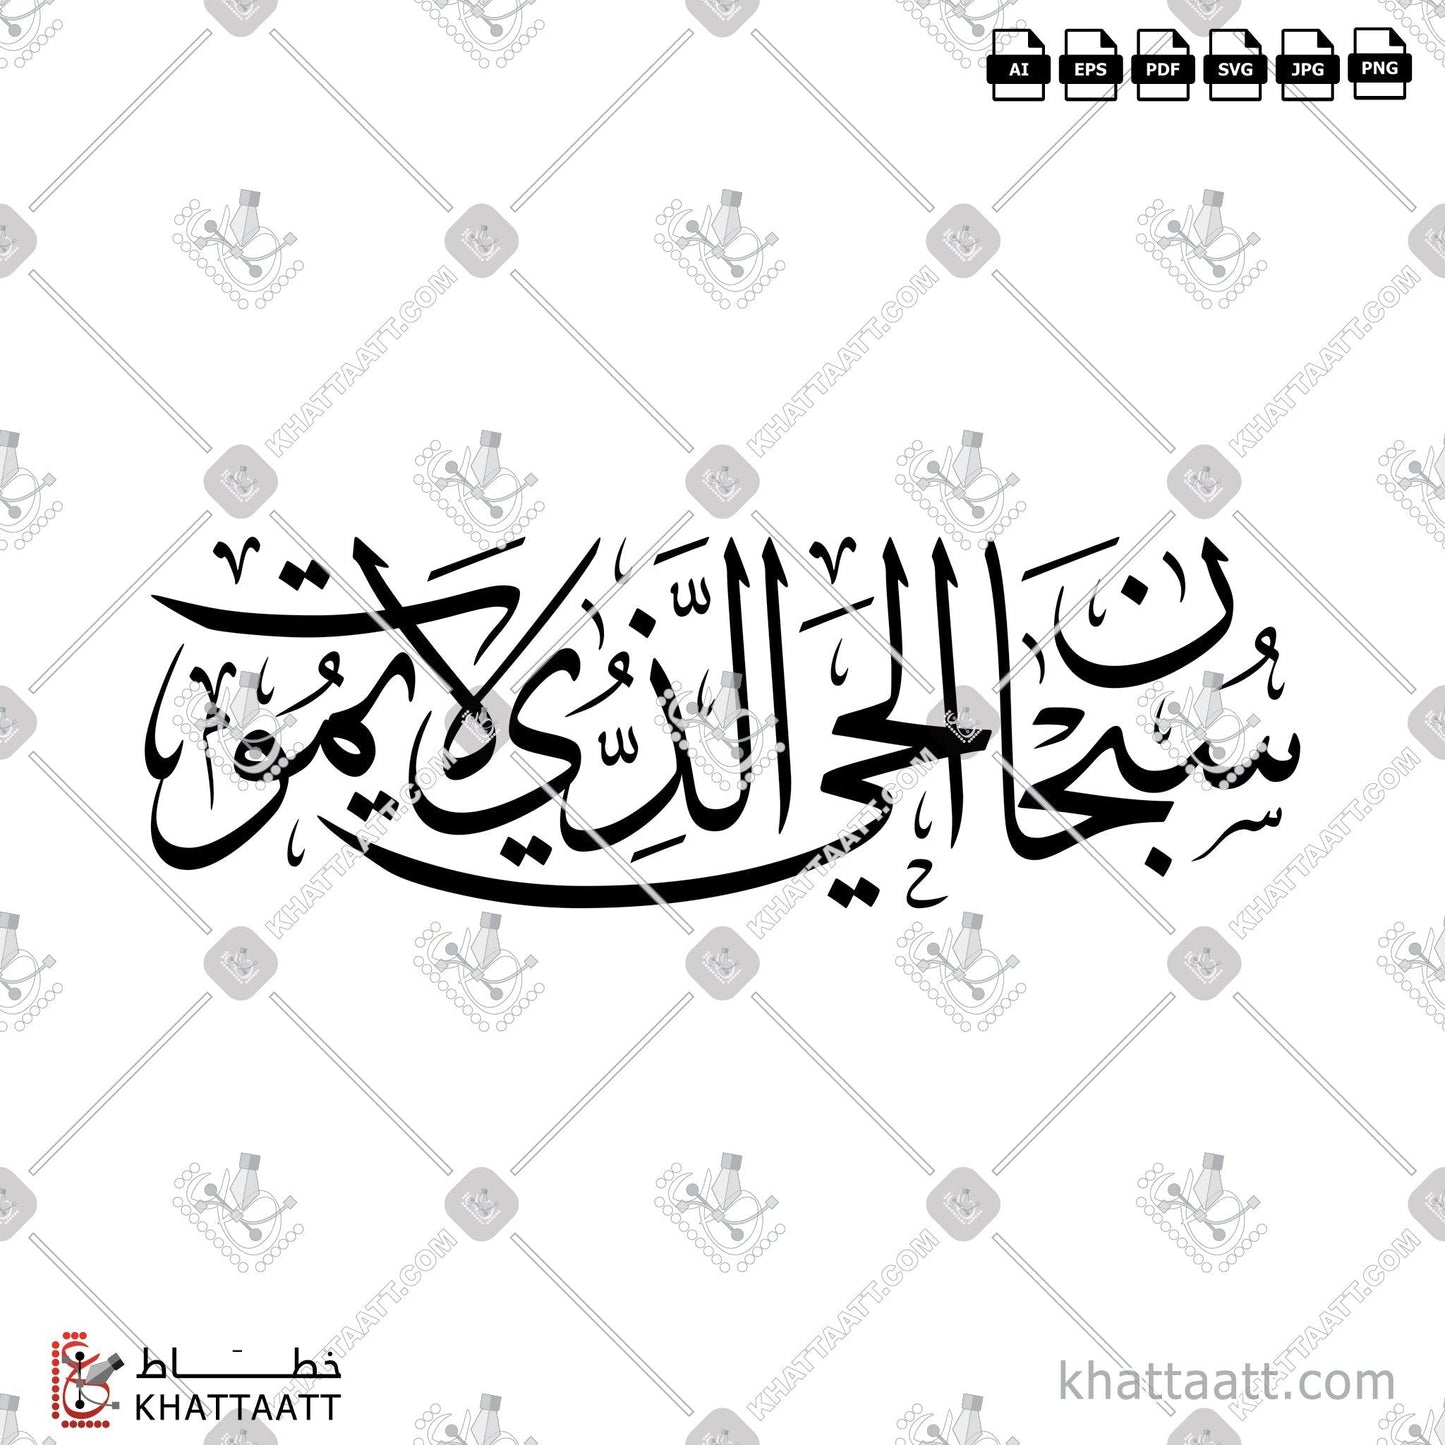 Digital Arabic Calligraphy Vector of سبحان الحي الذي لا يموت in Thuluth - خط الثلث